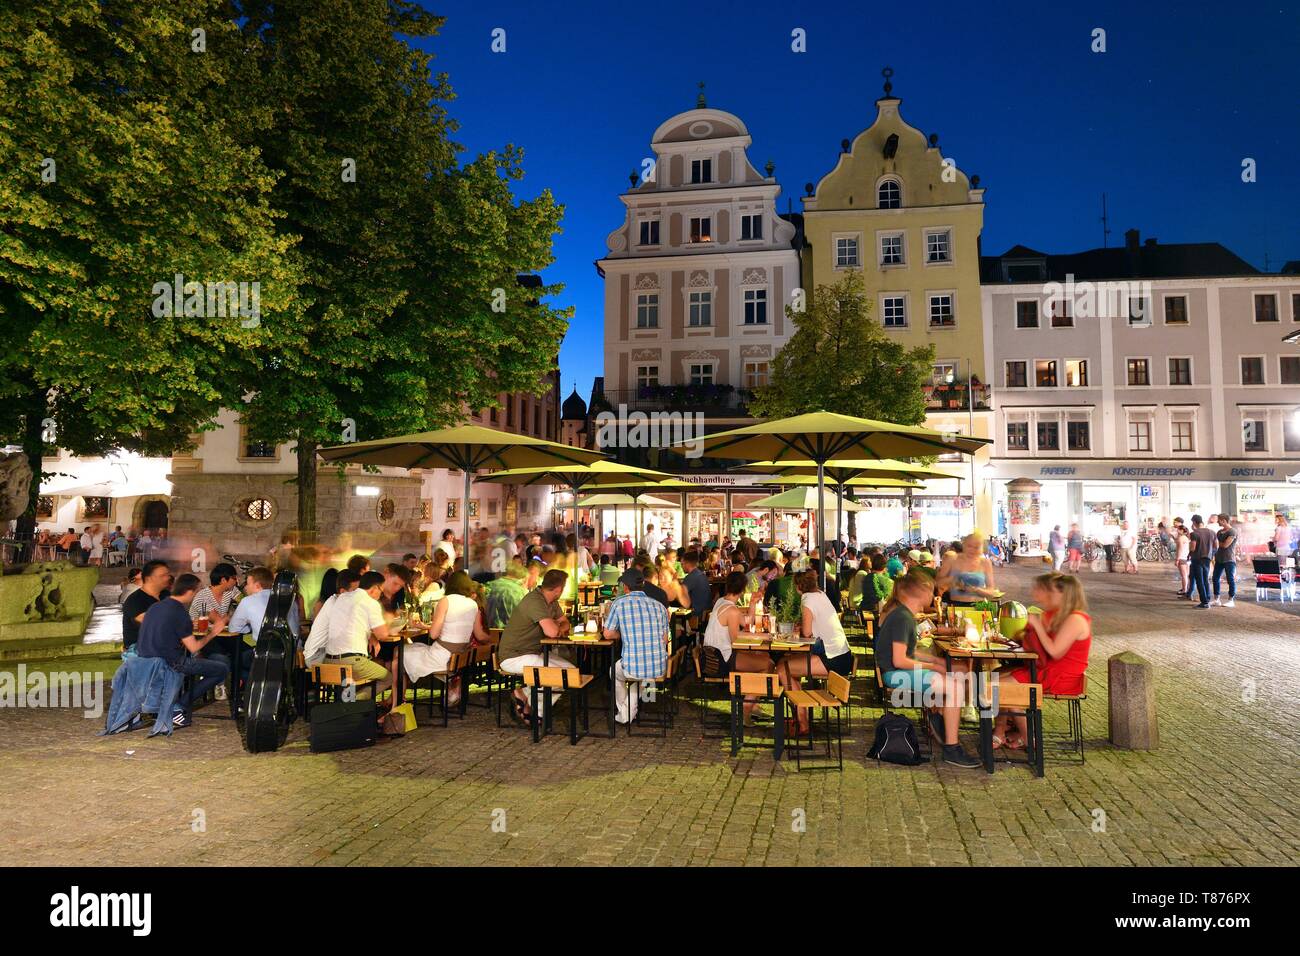 Germany, Bavaria, Upper Palatinate, Regensburg, historical center listed as World Heritage by UNESCO, Kohlenmarkt Stock Photo